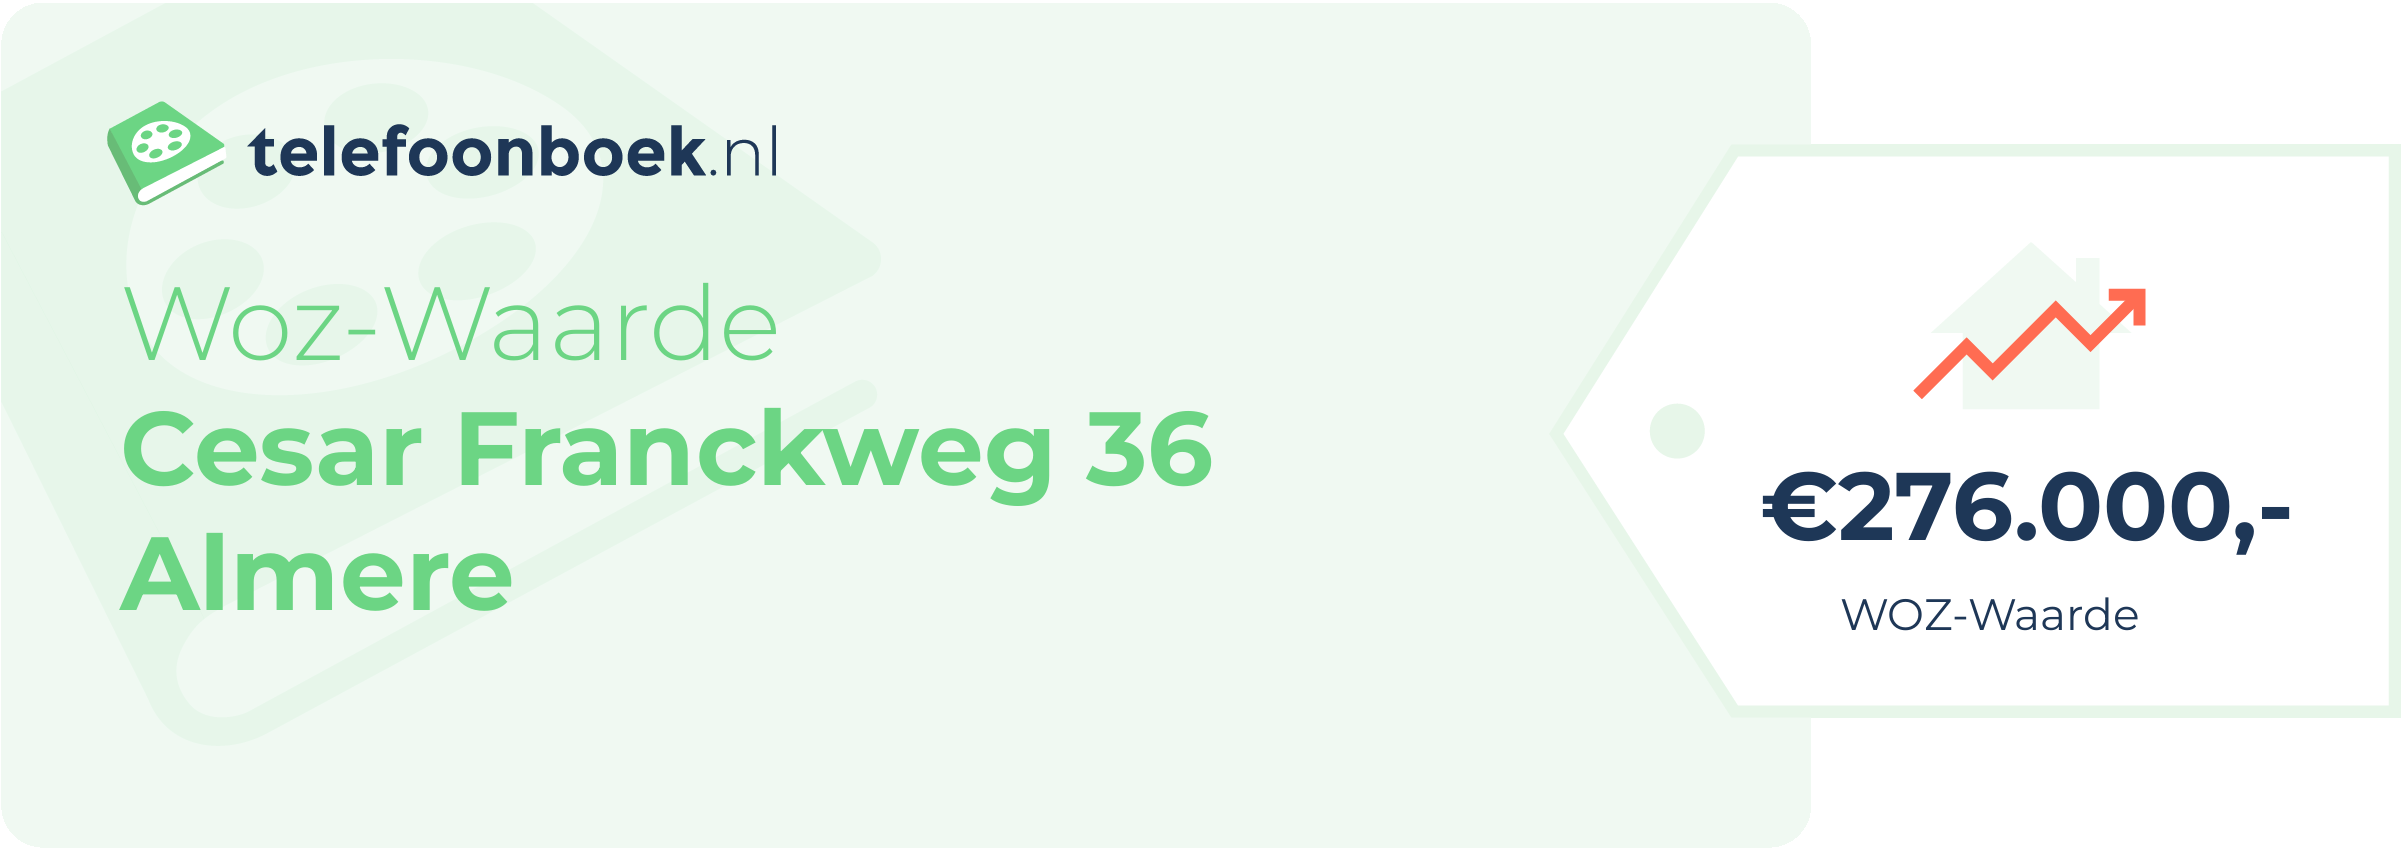 WOZ-waarde Cesar Franckweg 36 Almere